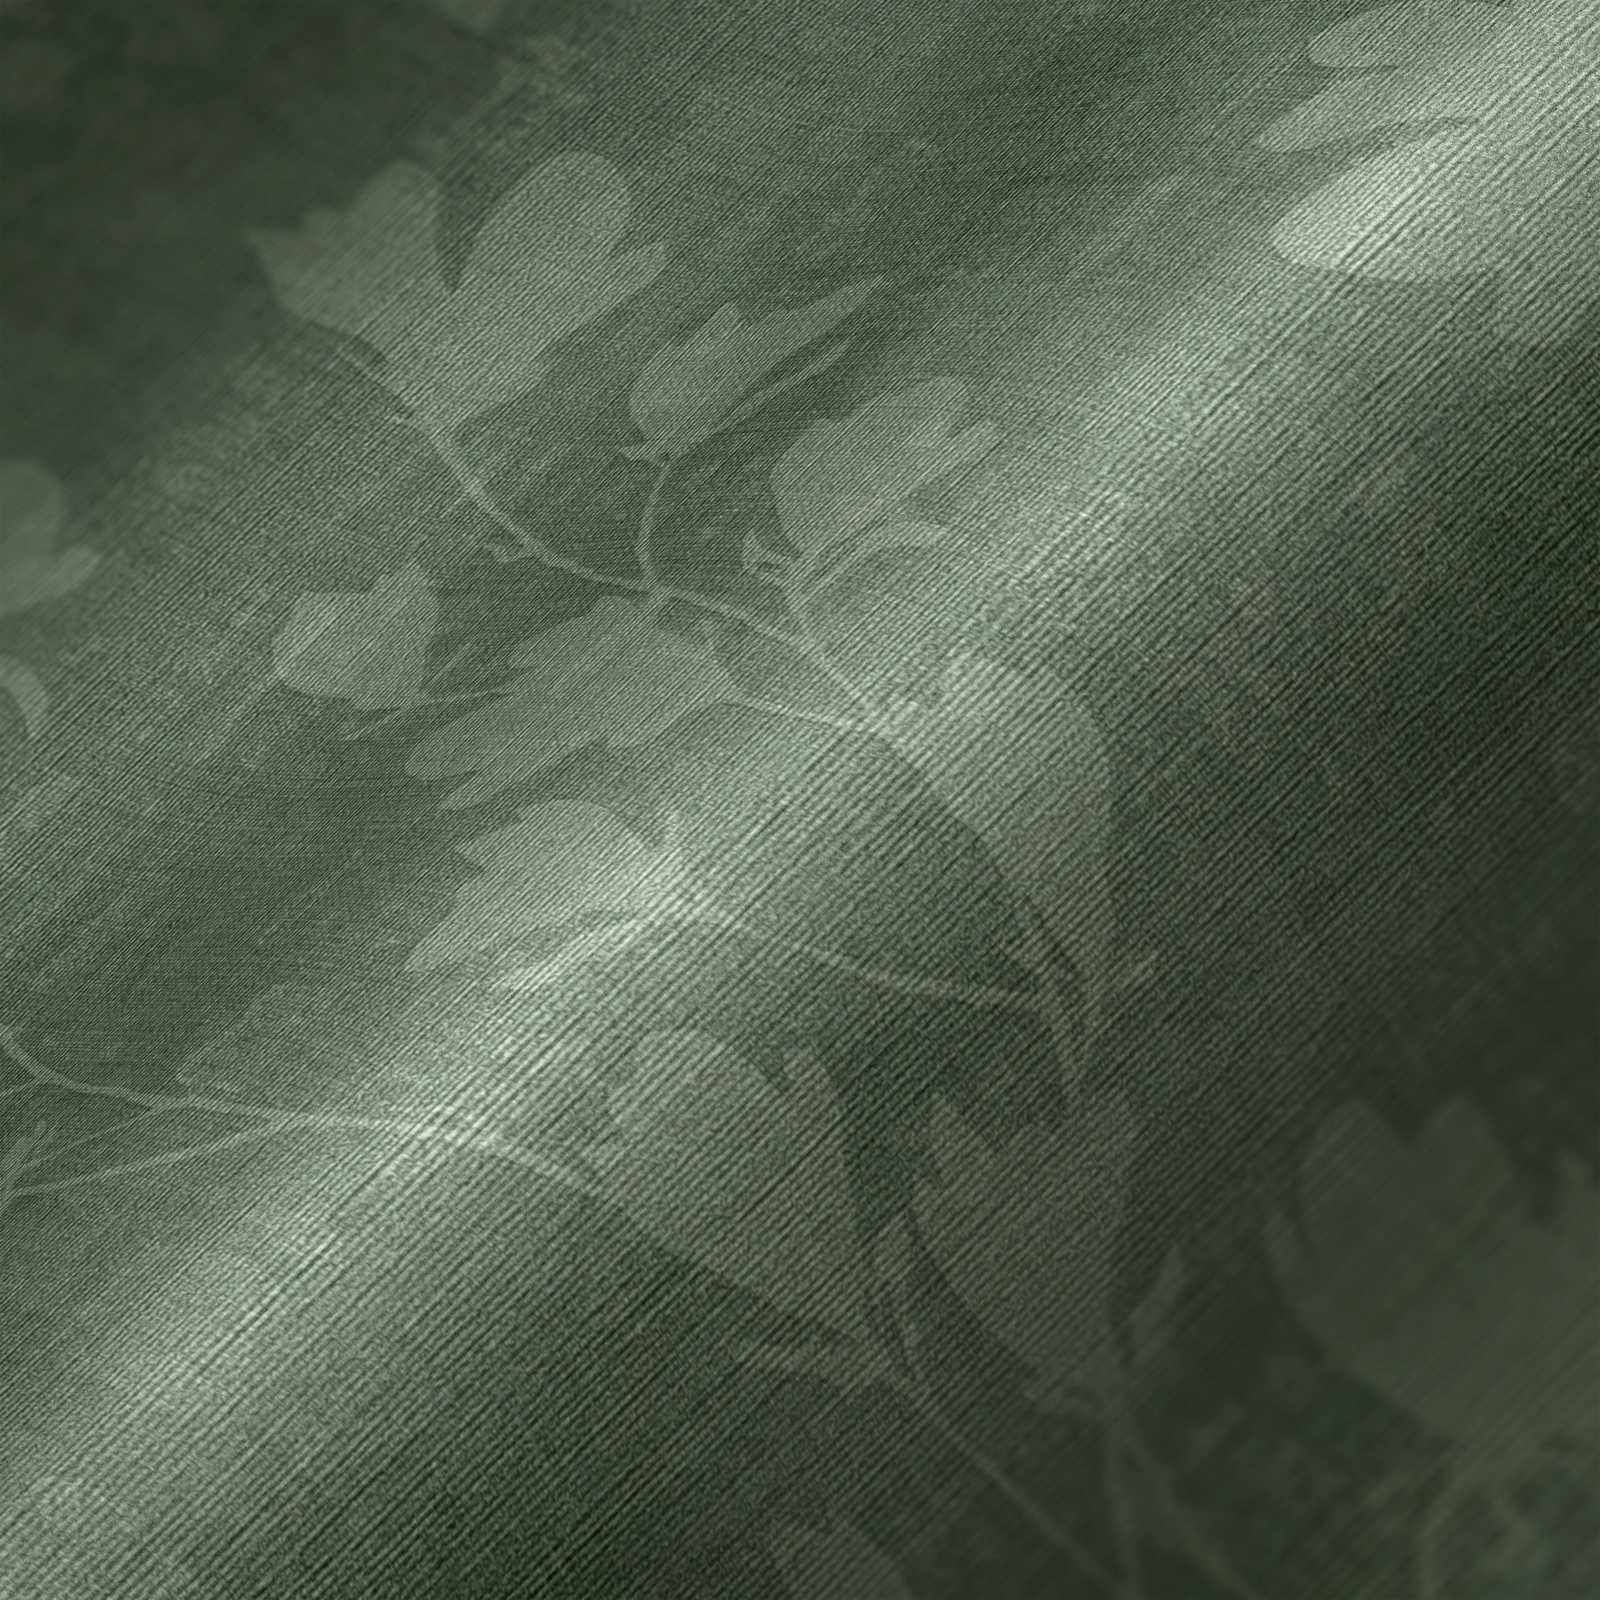             Papier peint naturel avec motif de feuilles - vert
        